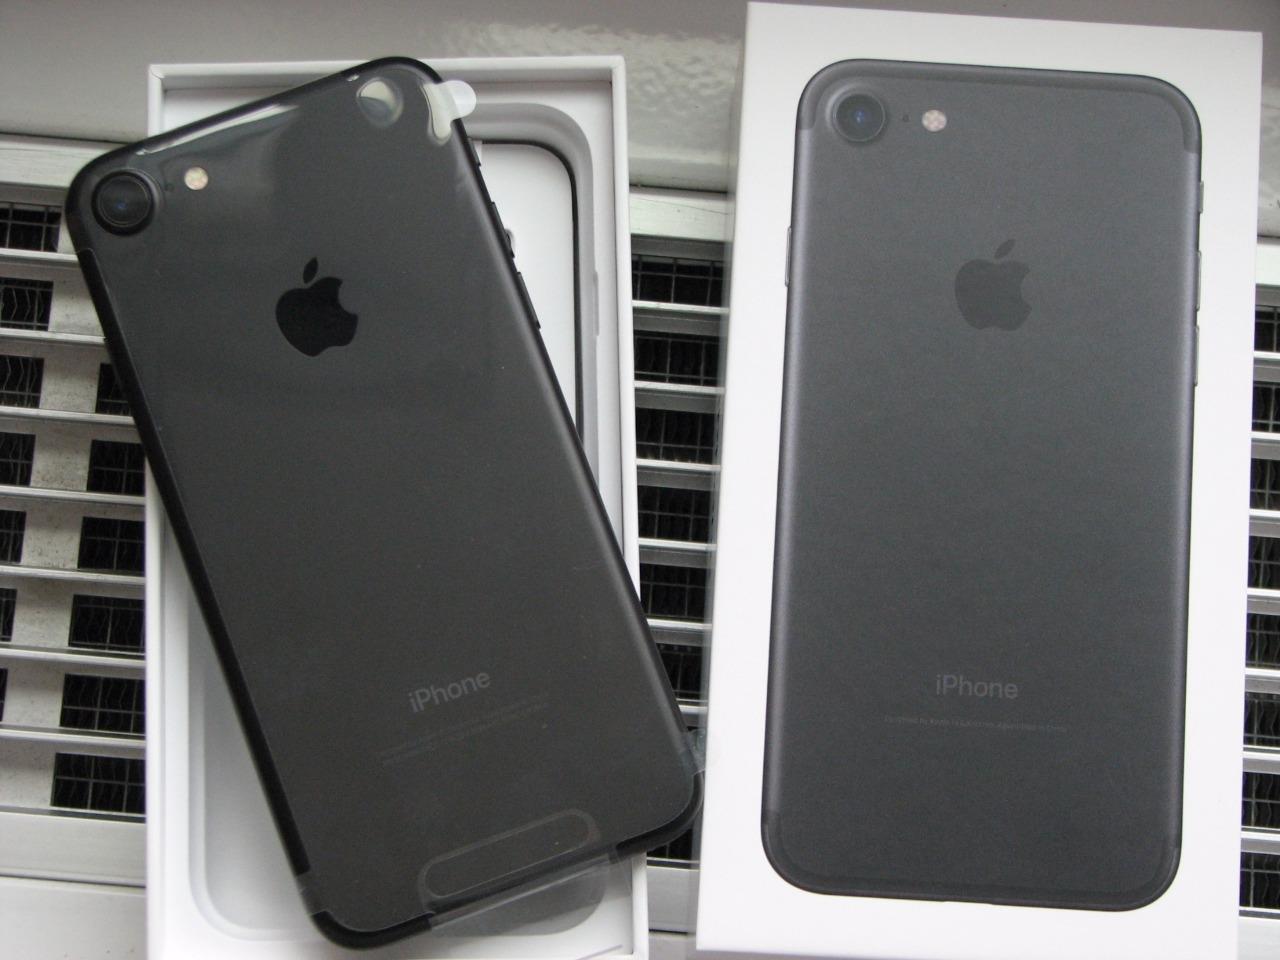 New Apple Iphone 6/6s PlusElectronics and AppliancesPhone - FAX - EPABXEast DelhiNirman Vihar